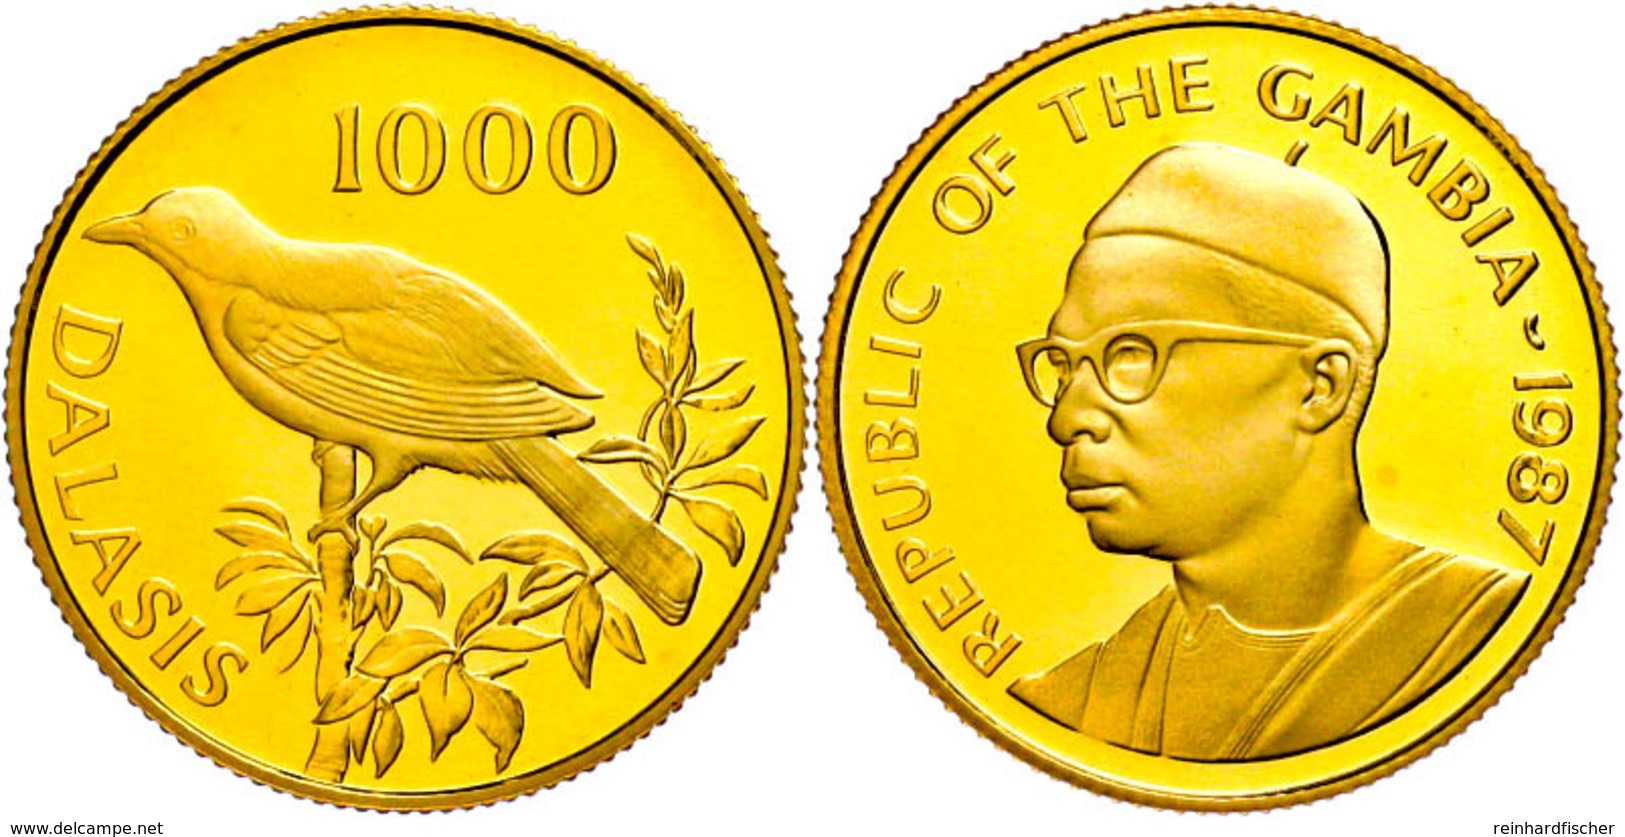 1000 Dalasis, Gold, 1987, Gambia-Schneeballwürger, 9,14g Fein, KM 25, In Kapsel, Mit WWF-Zertifikat, PP. Auflage 5000 St - Gambia